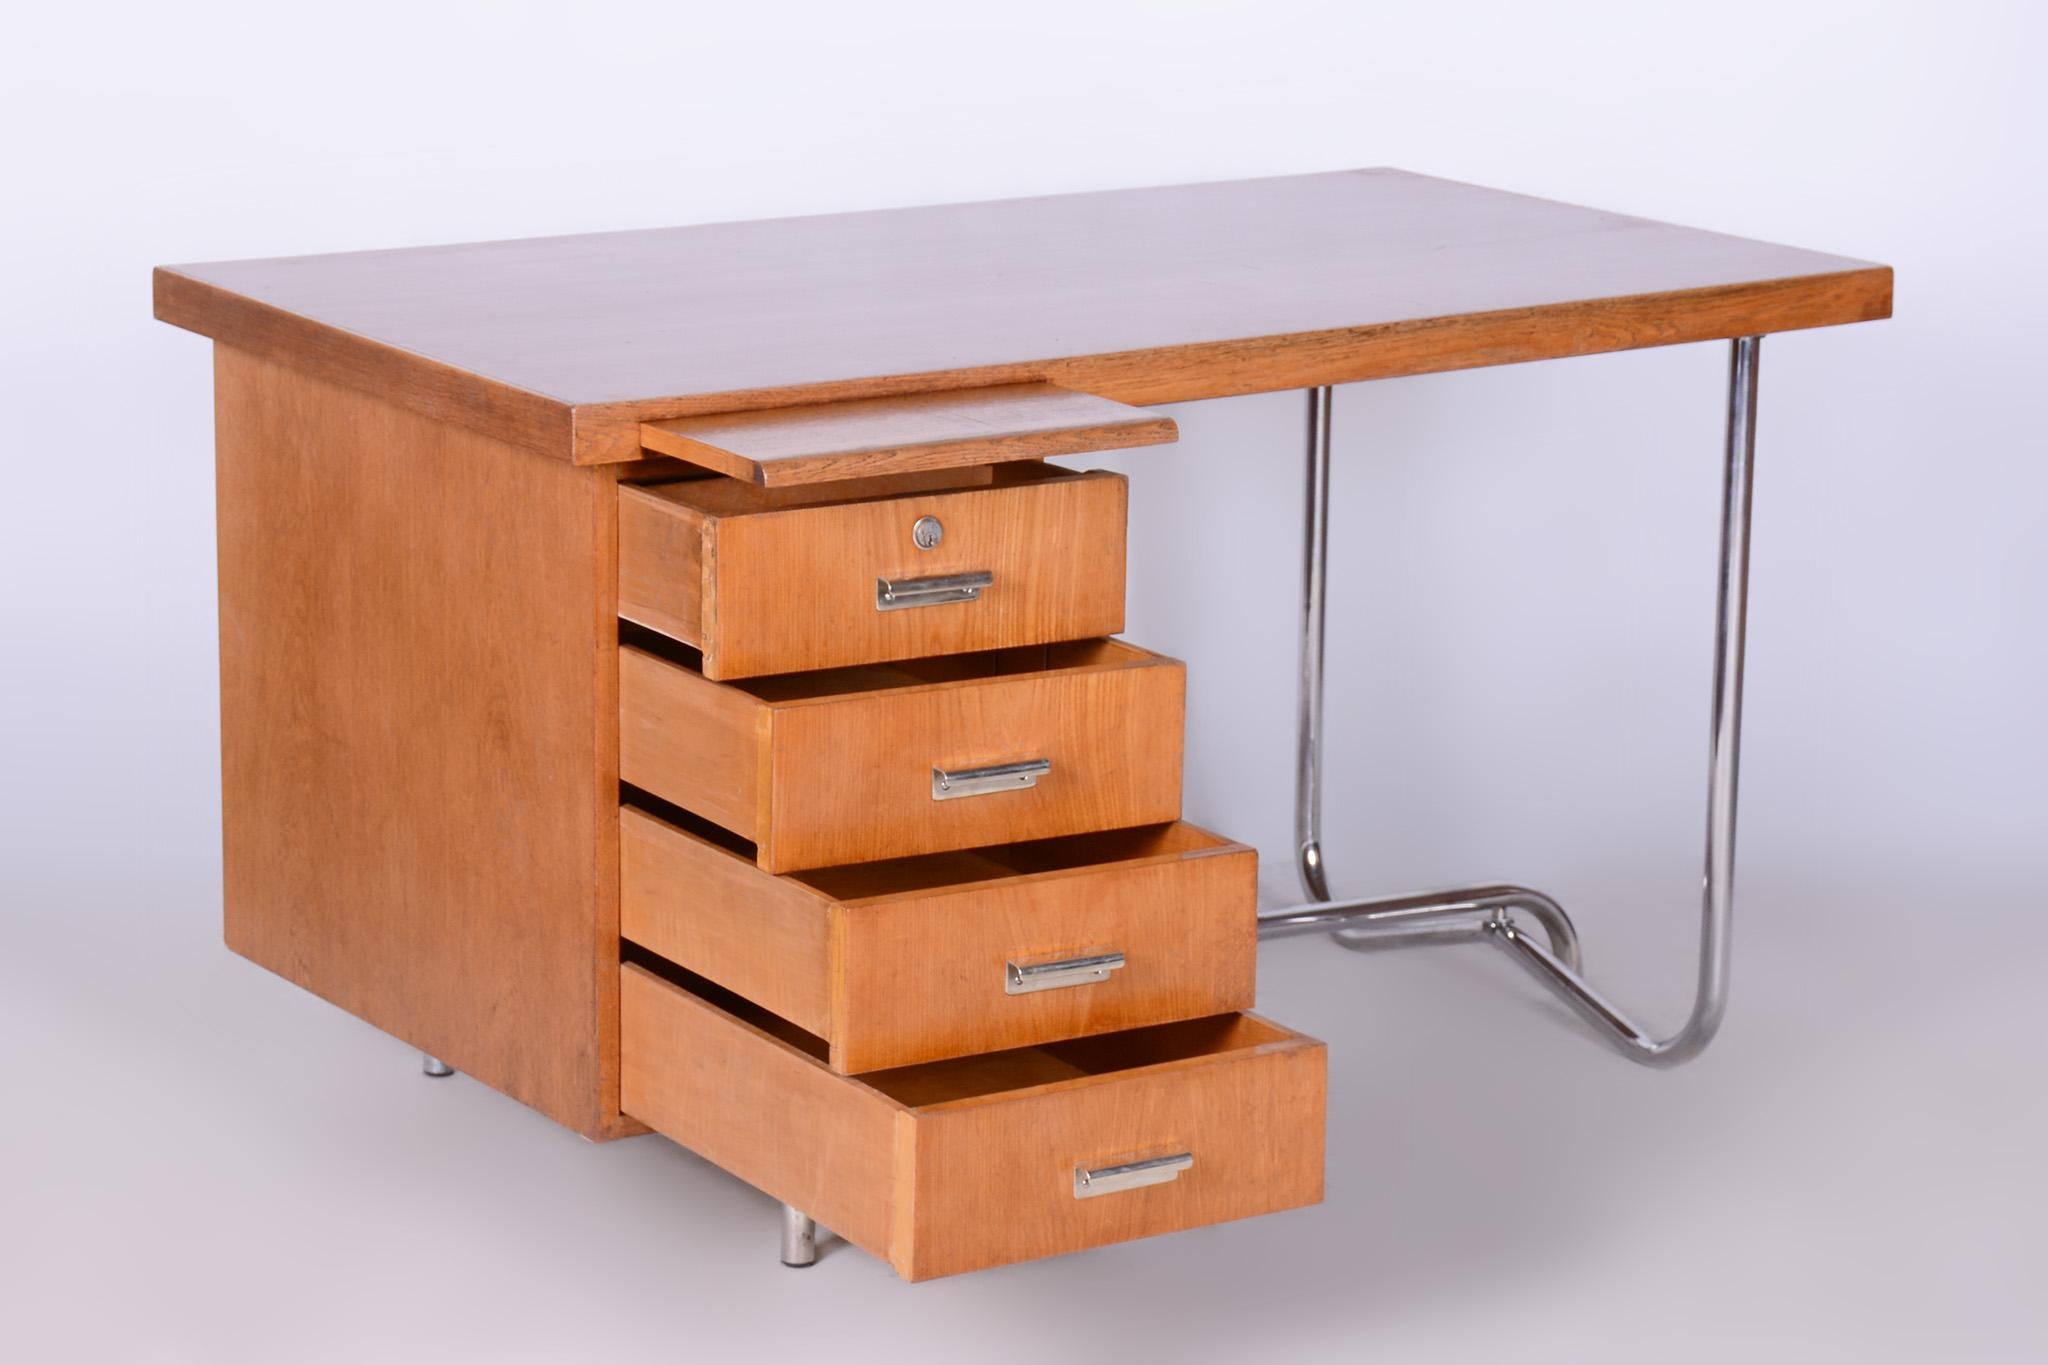 Restored Bauhaus Oak Writing Desk, Hynek Gottwald, Chrome, Czechia, 1930s For Sale 1